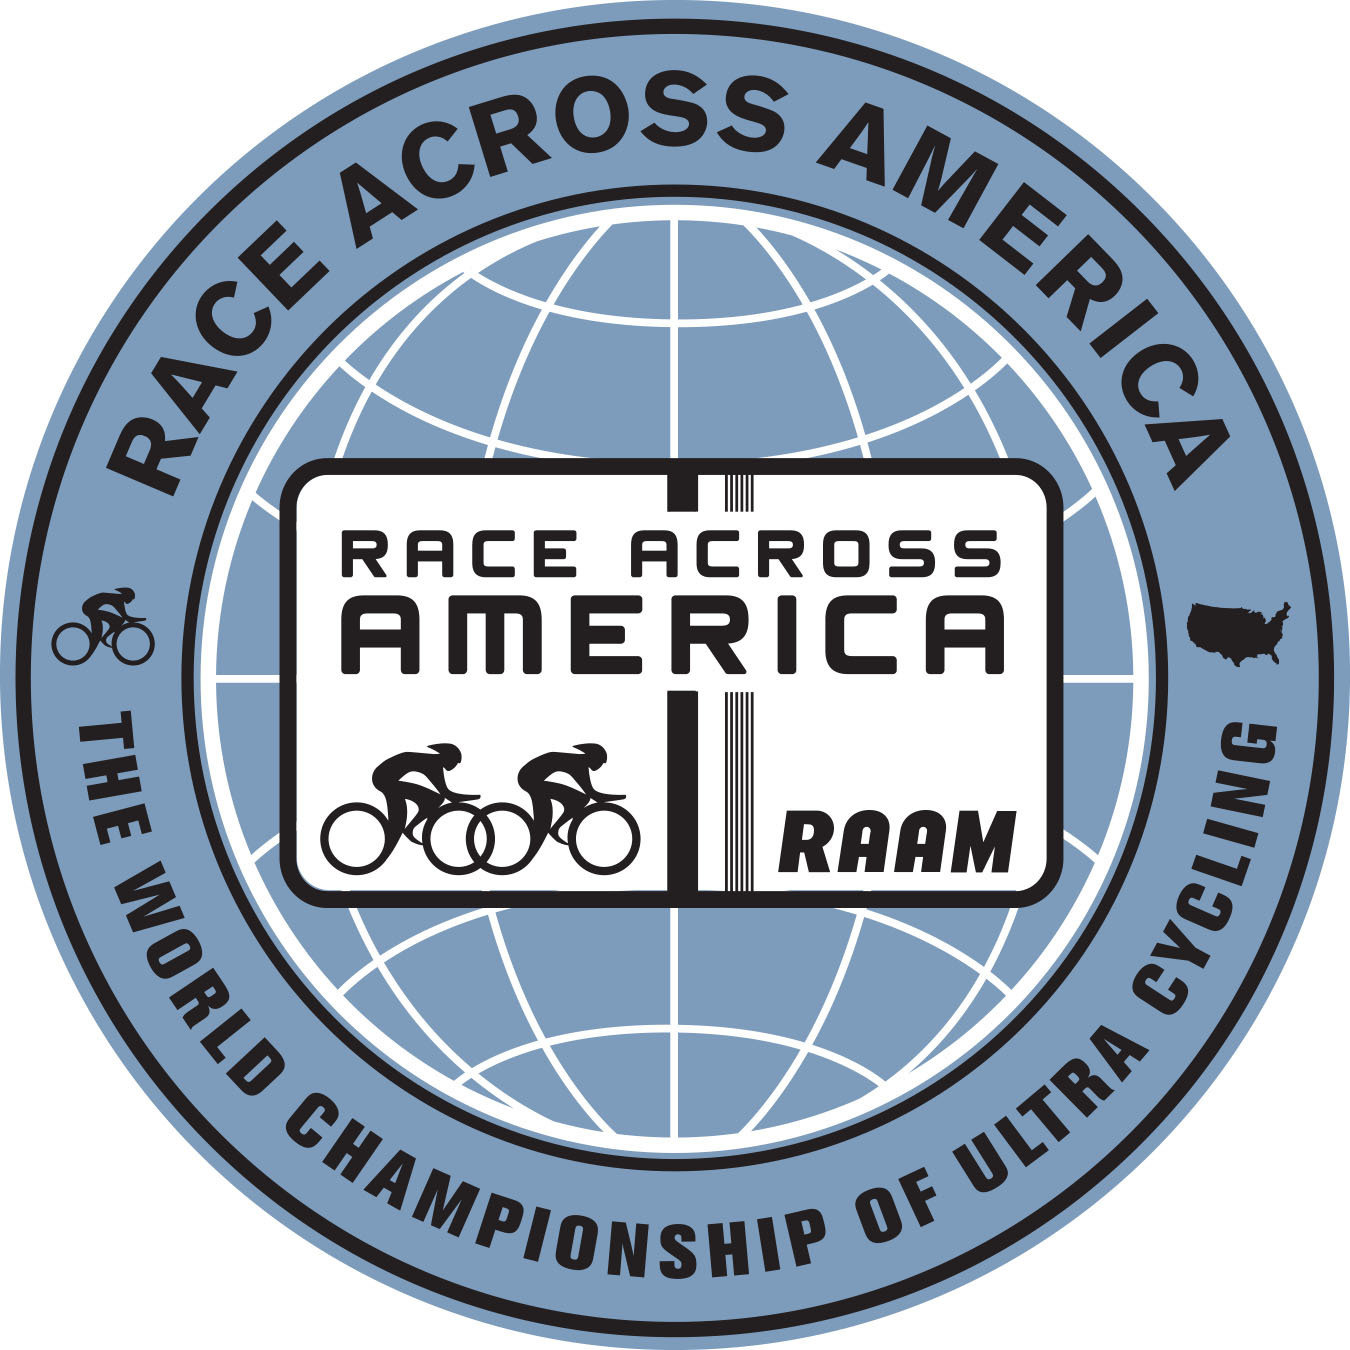 RAAM - World Championship of Ultracycling T-Shirt